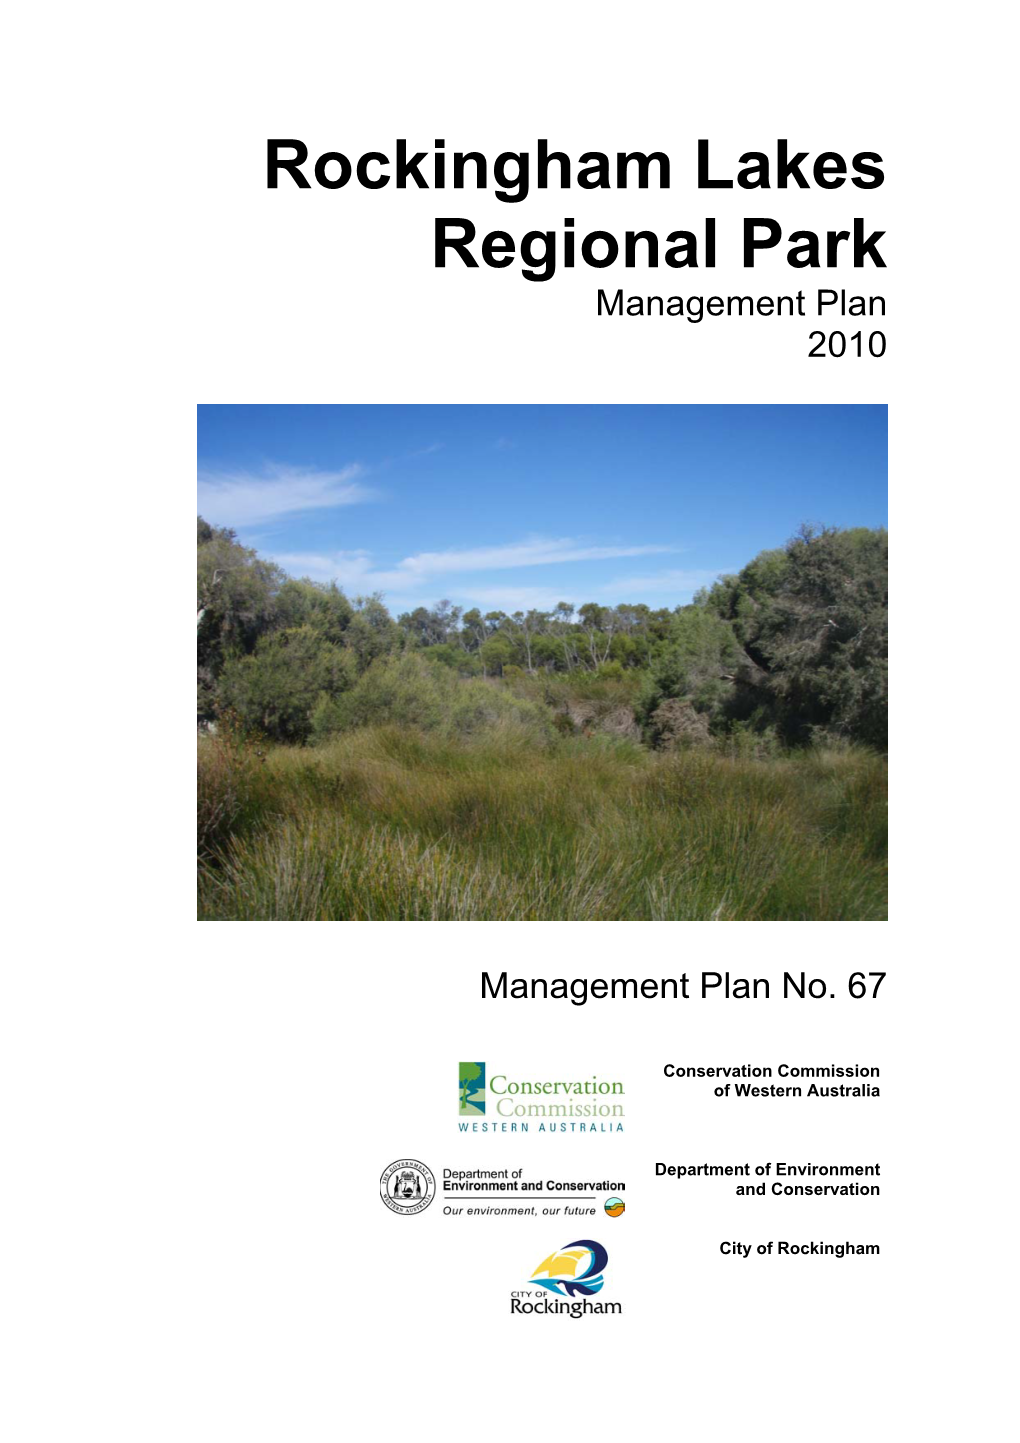 Rockingham Lakes Regional Park Management Plan 2010